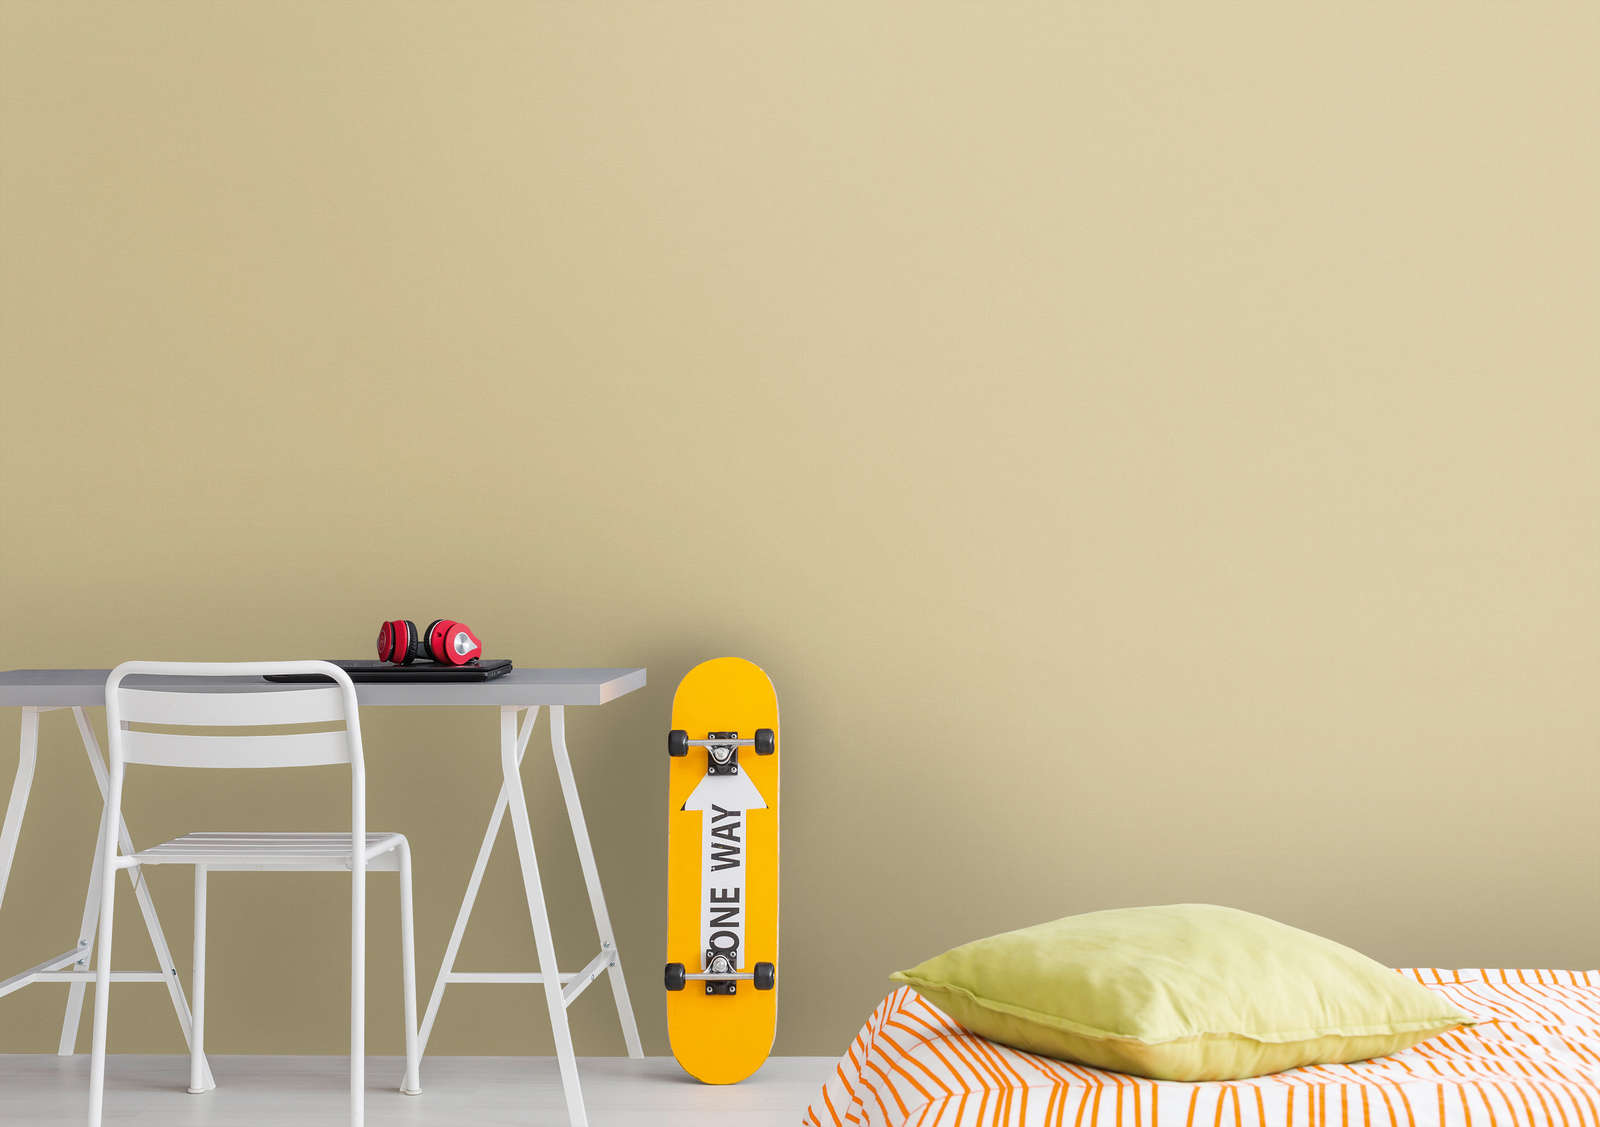             Plain non-woven wallpaper in a warm shade - yellow
        